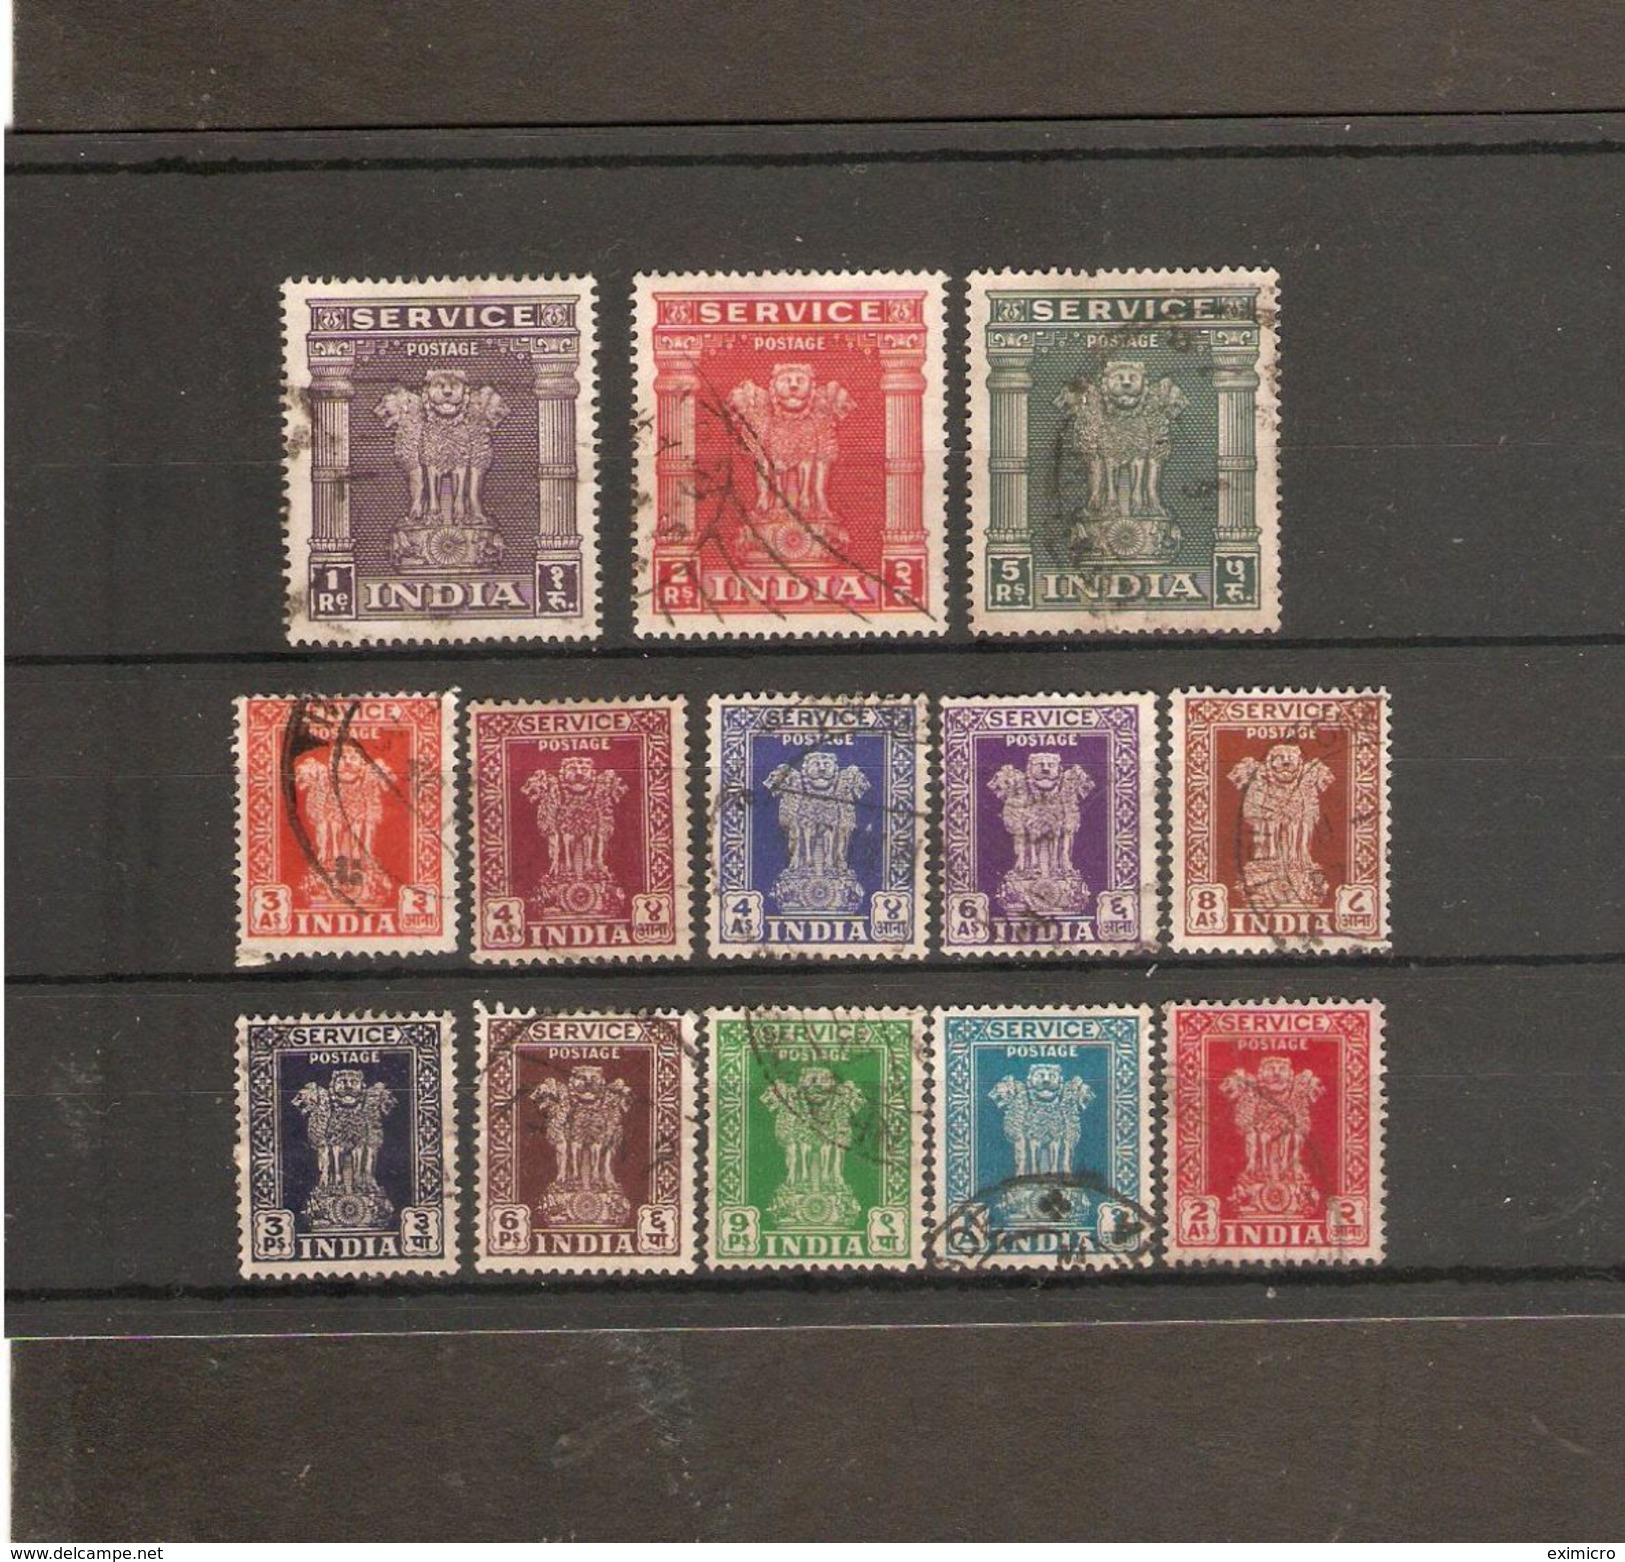 INDIA 1950 - 1951 OFFICIALS SET TO 5R SG O151/O163 FINE USED - Dienstzegels